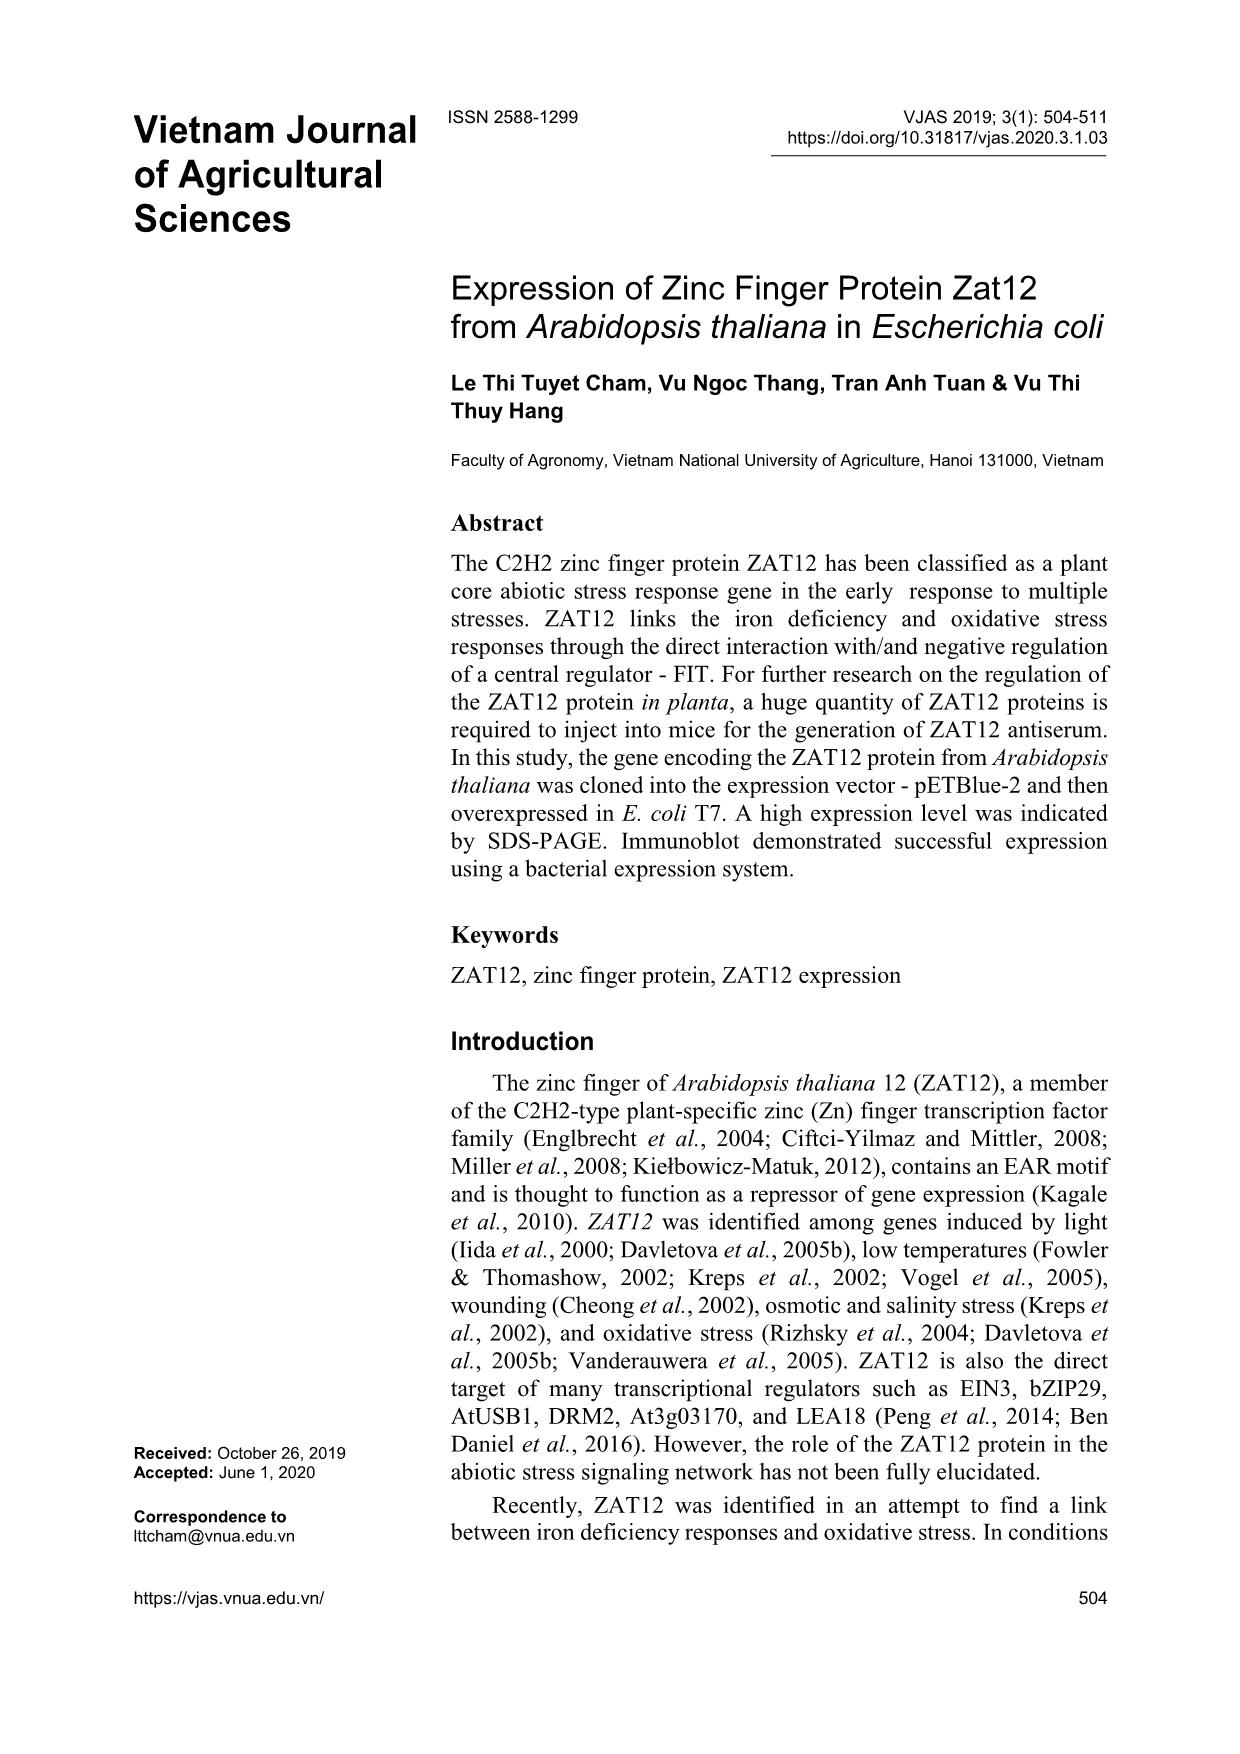 Expression of Zinc Finger Protein Zat12 from Arabidopsis thaliana in Escherichia coli trang 1